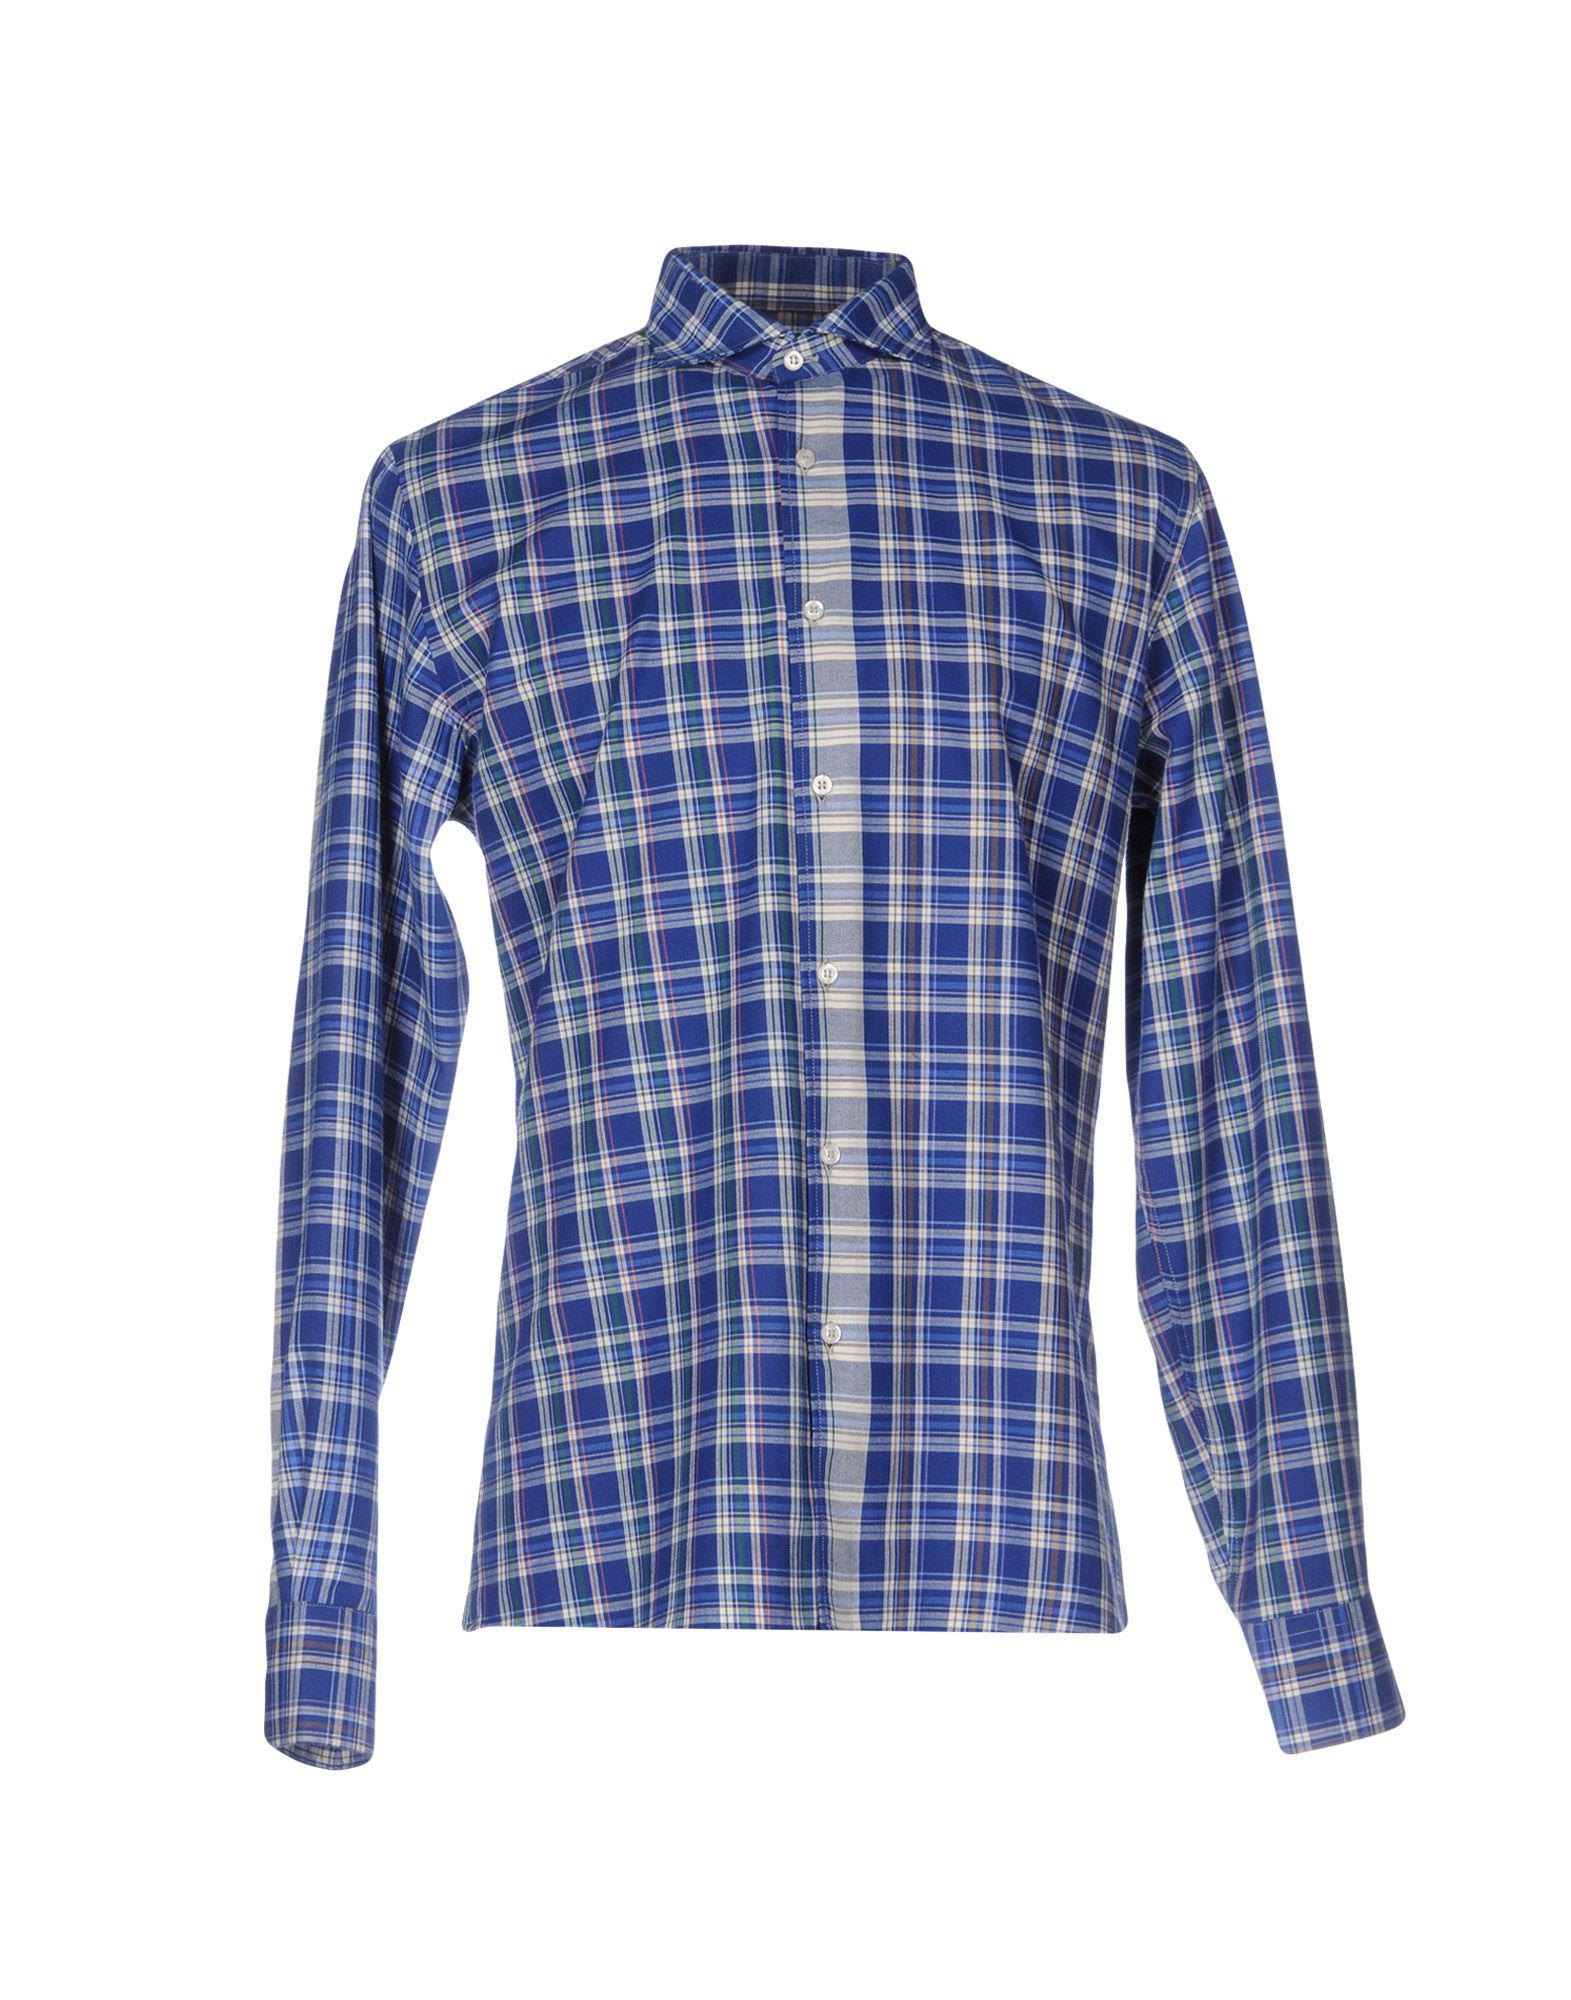 Dickson Flannel Shirt in Blue for Men - Lyst